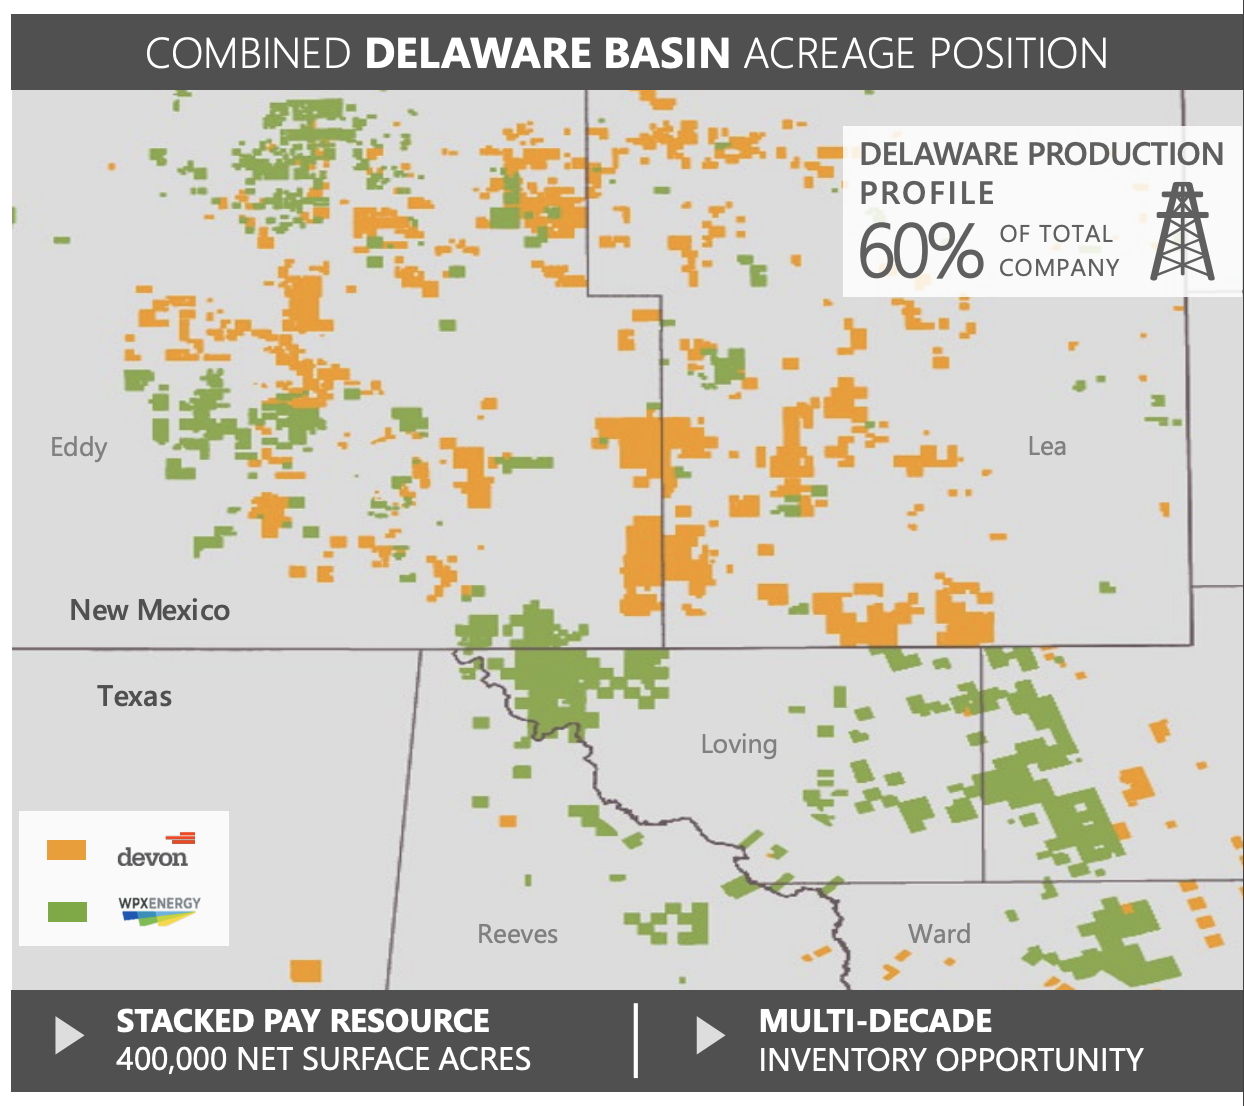 Devon, WPX Energy Combined Delaware Acreage Position Map